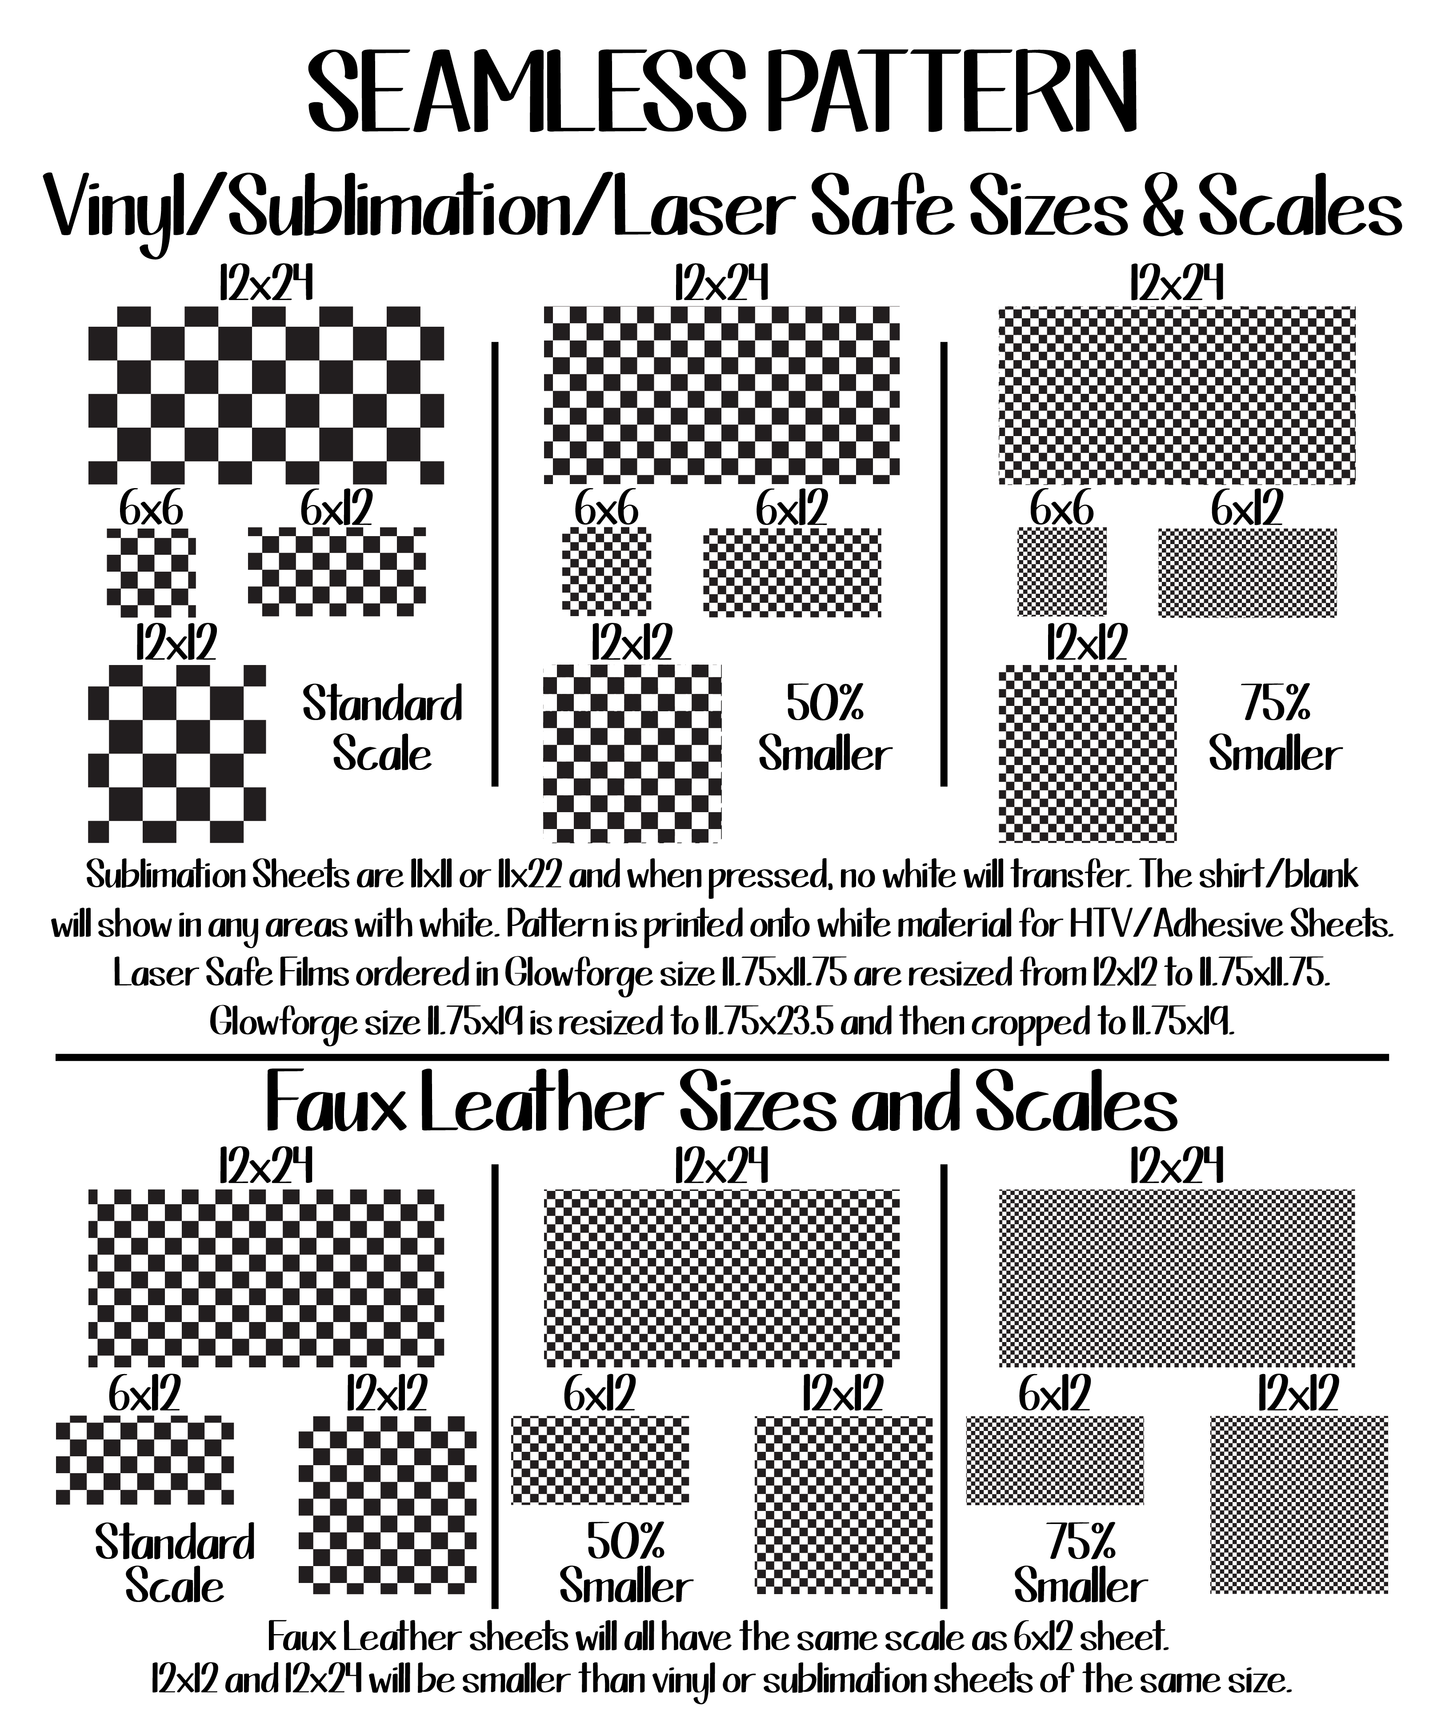 Rainbow Black Checkerboard ★ Laser Safe Adhesive Film (TAT 3 BUS DAYS)